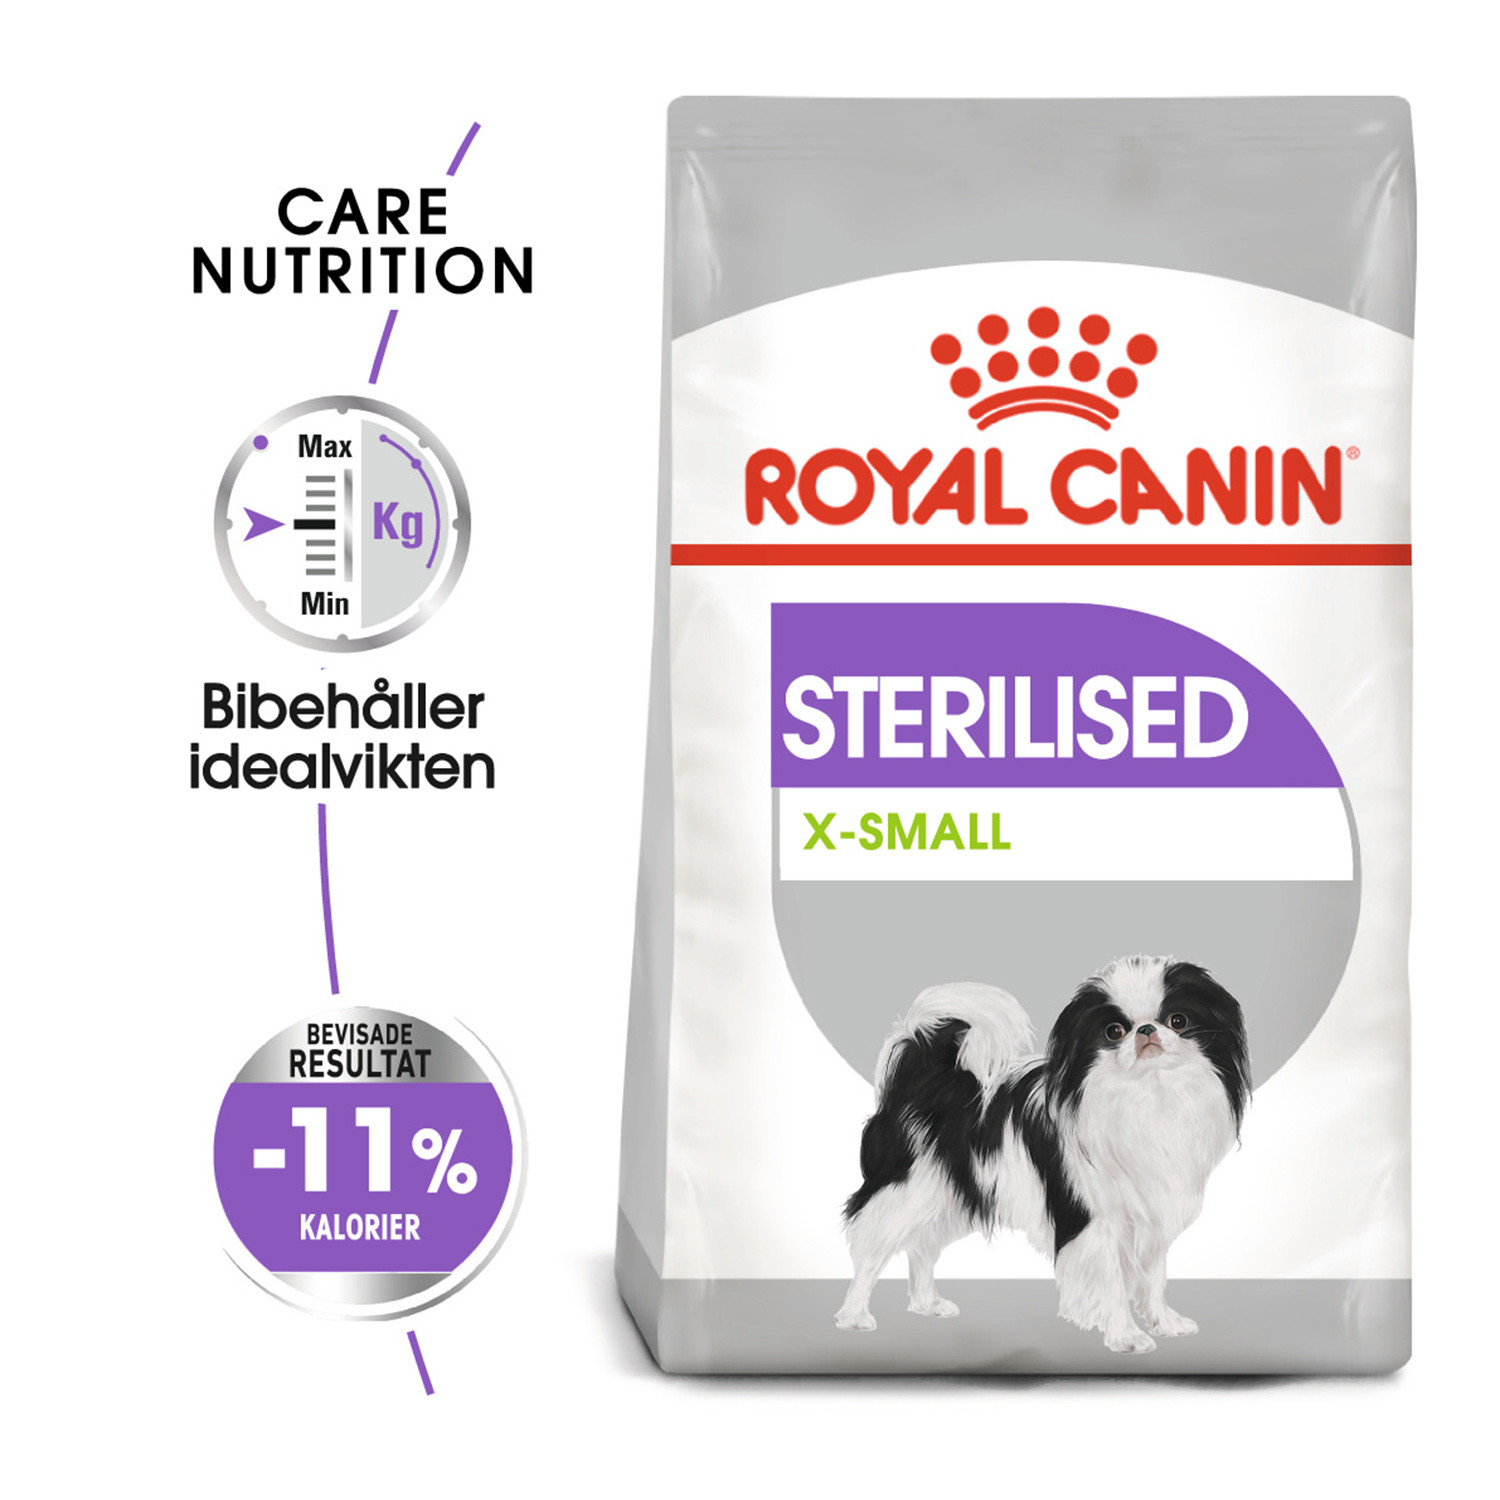 X-small sterilised royal canin 500 g